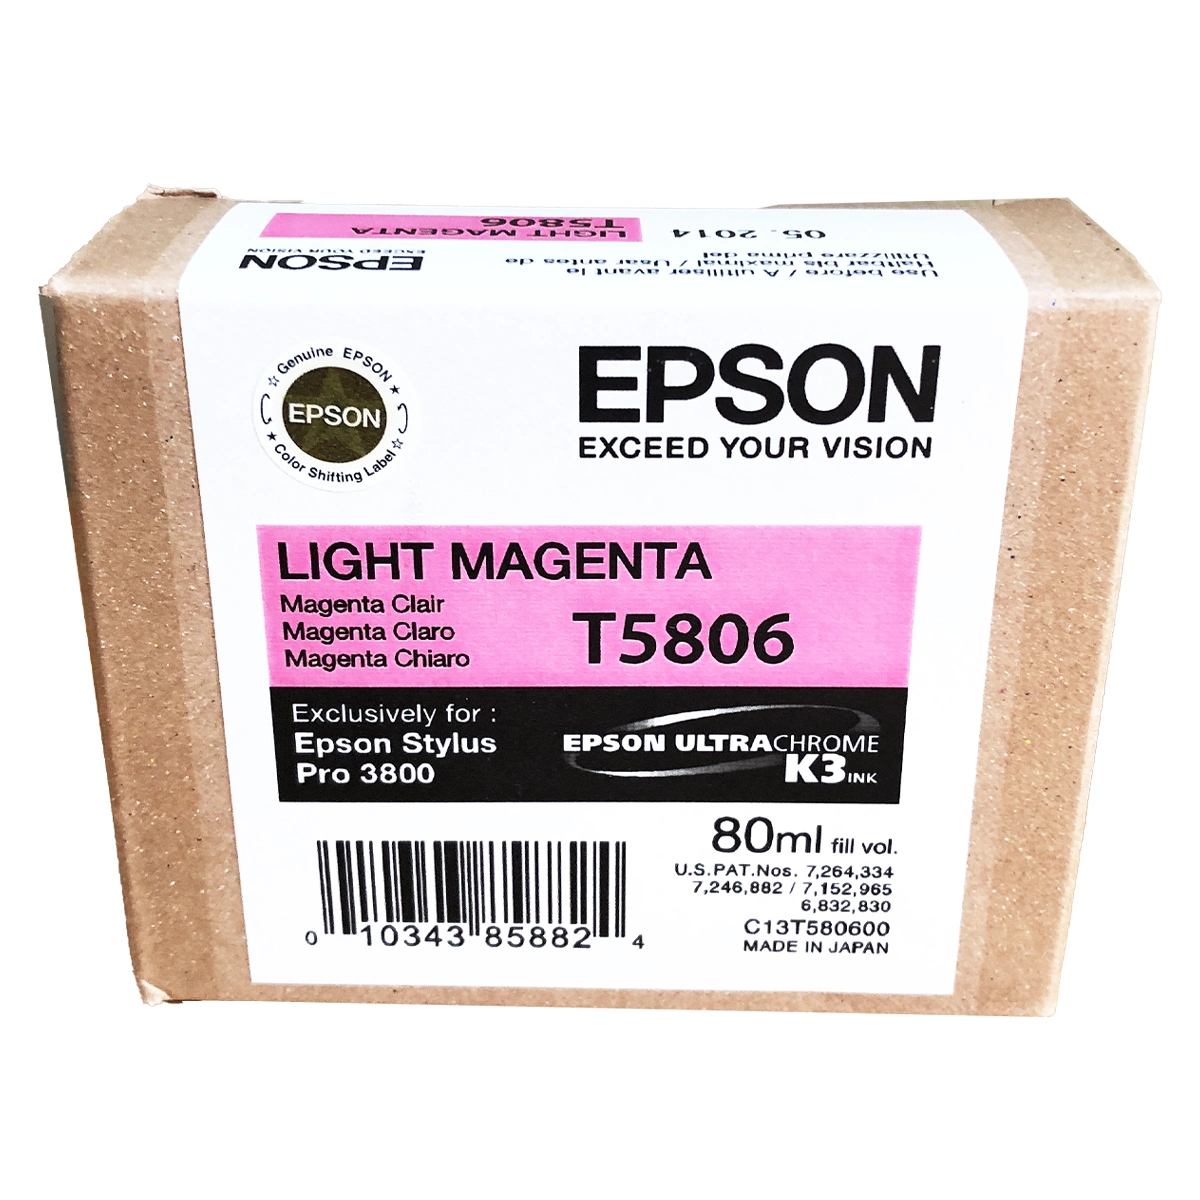 epson stylus photo 3800 light magenta ink cartridge new in box